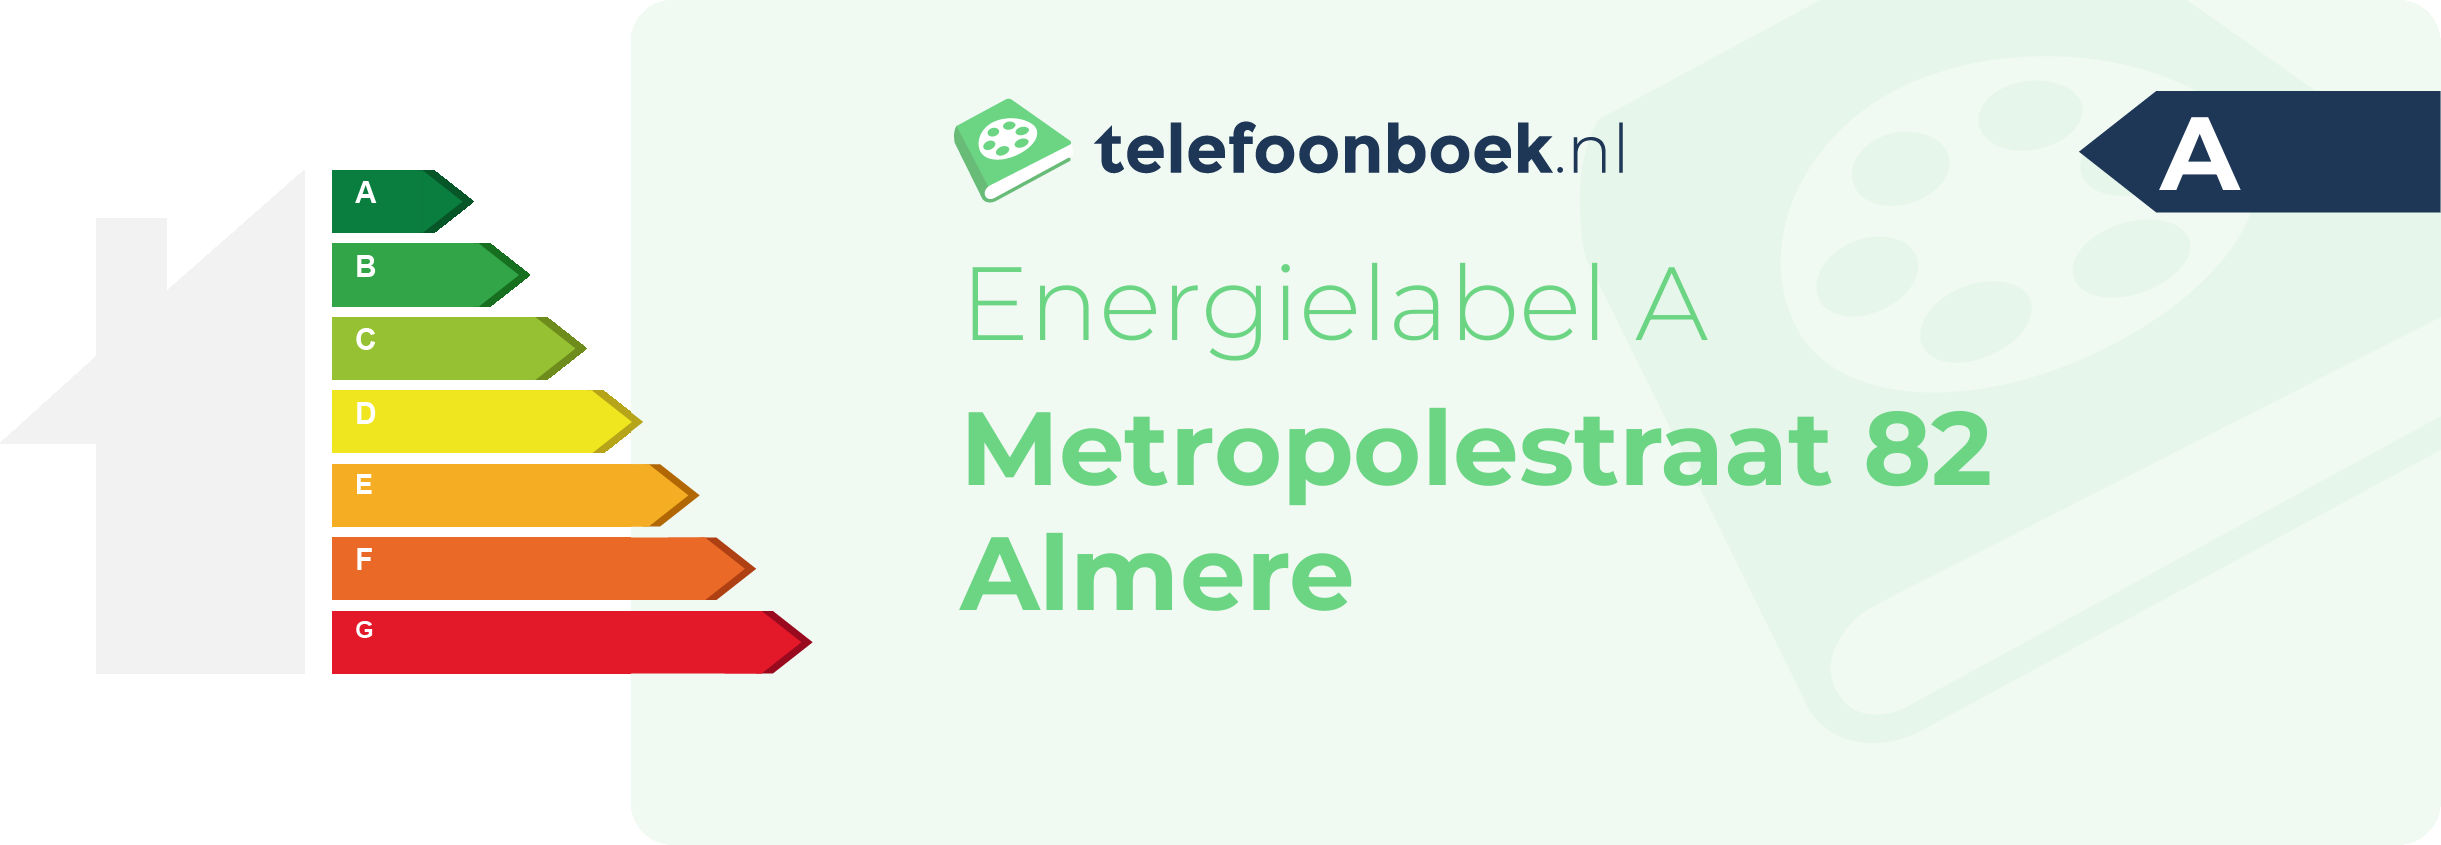 Energielabel Metropolestraat 82 Almere